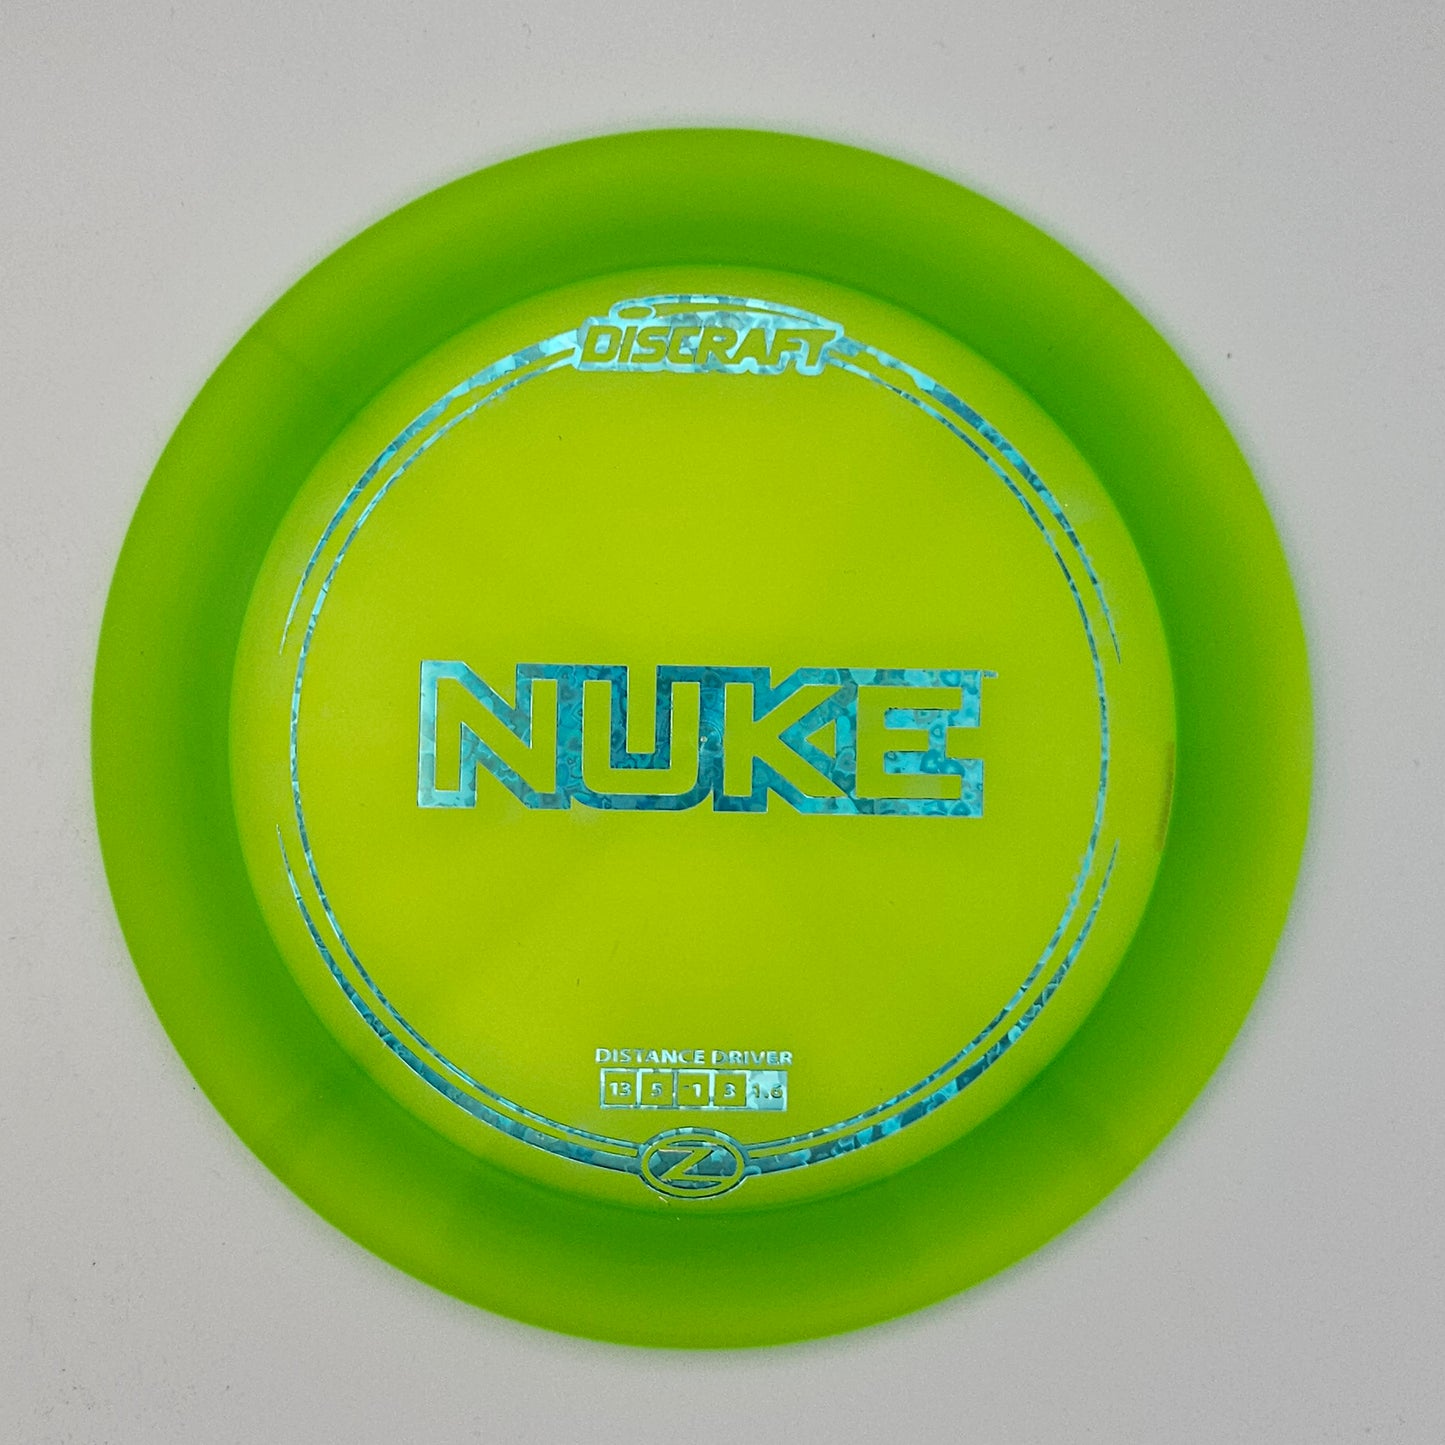 Discraft Z Line Nuke